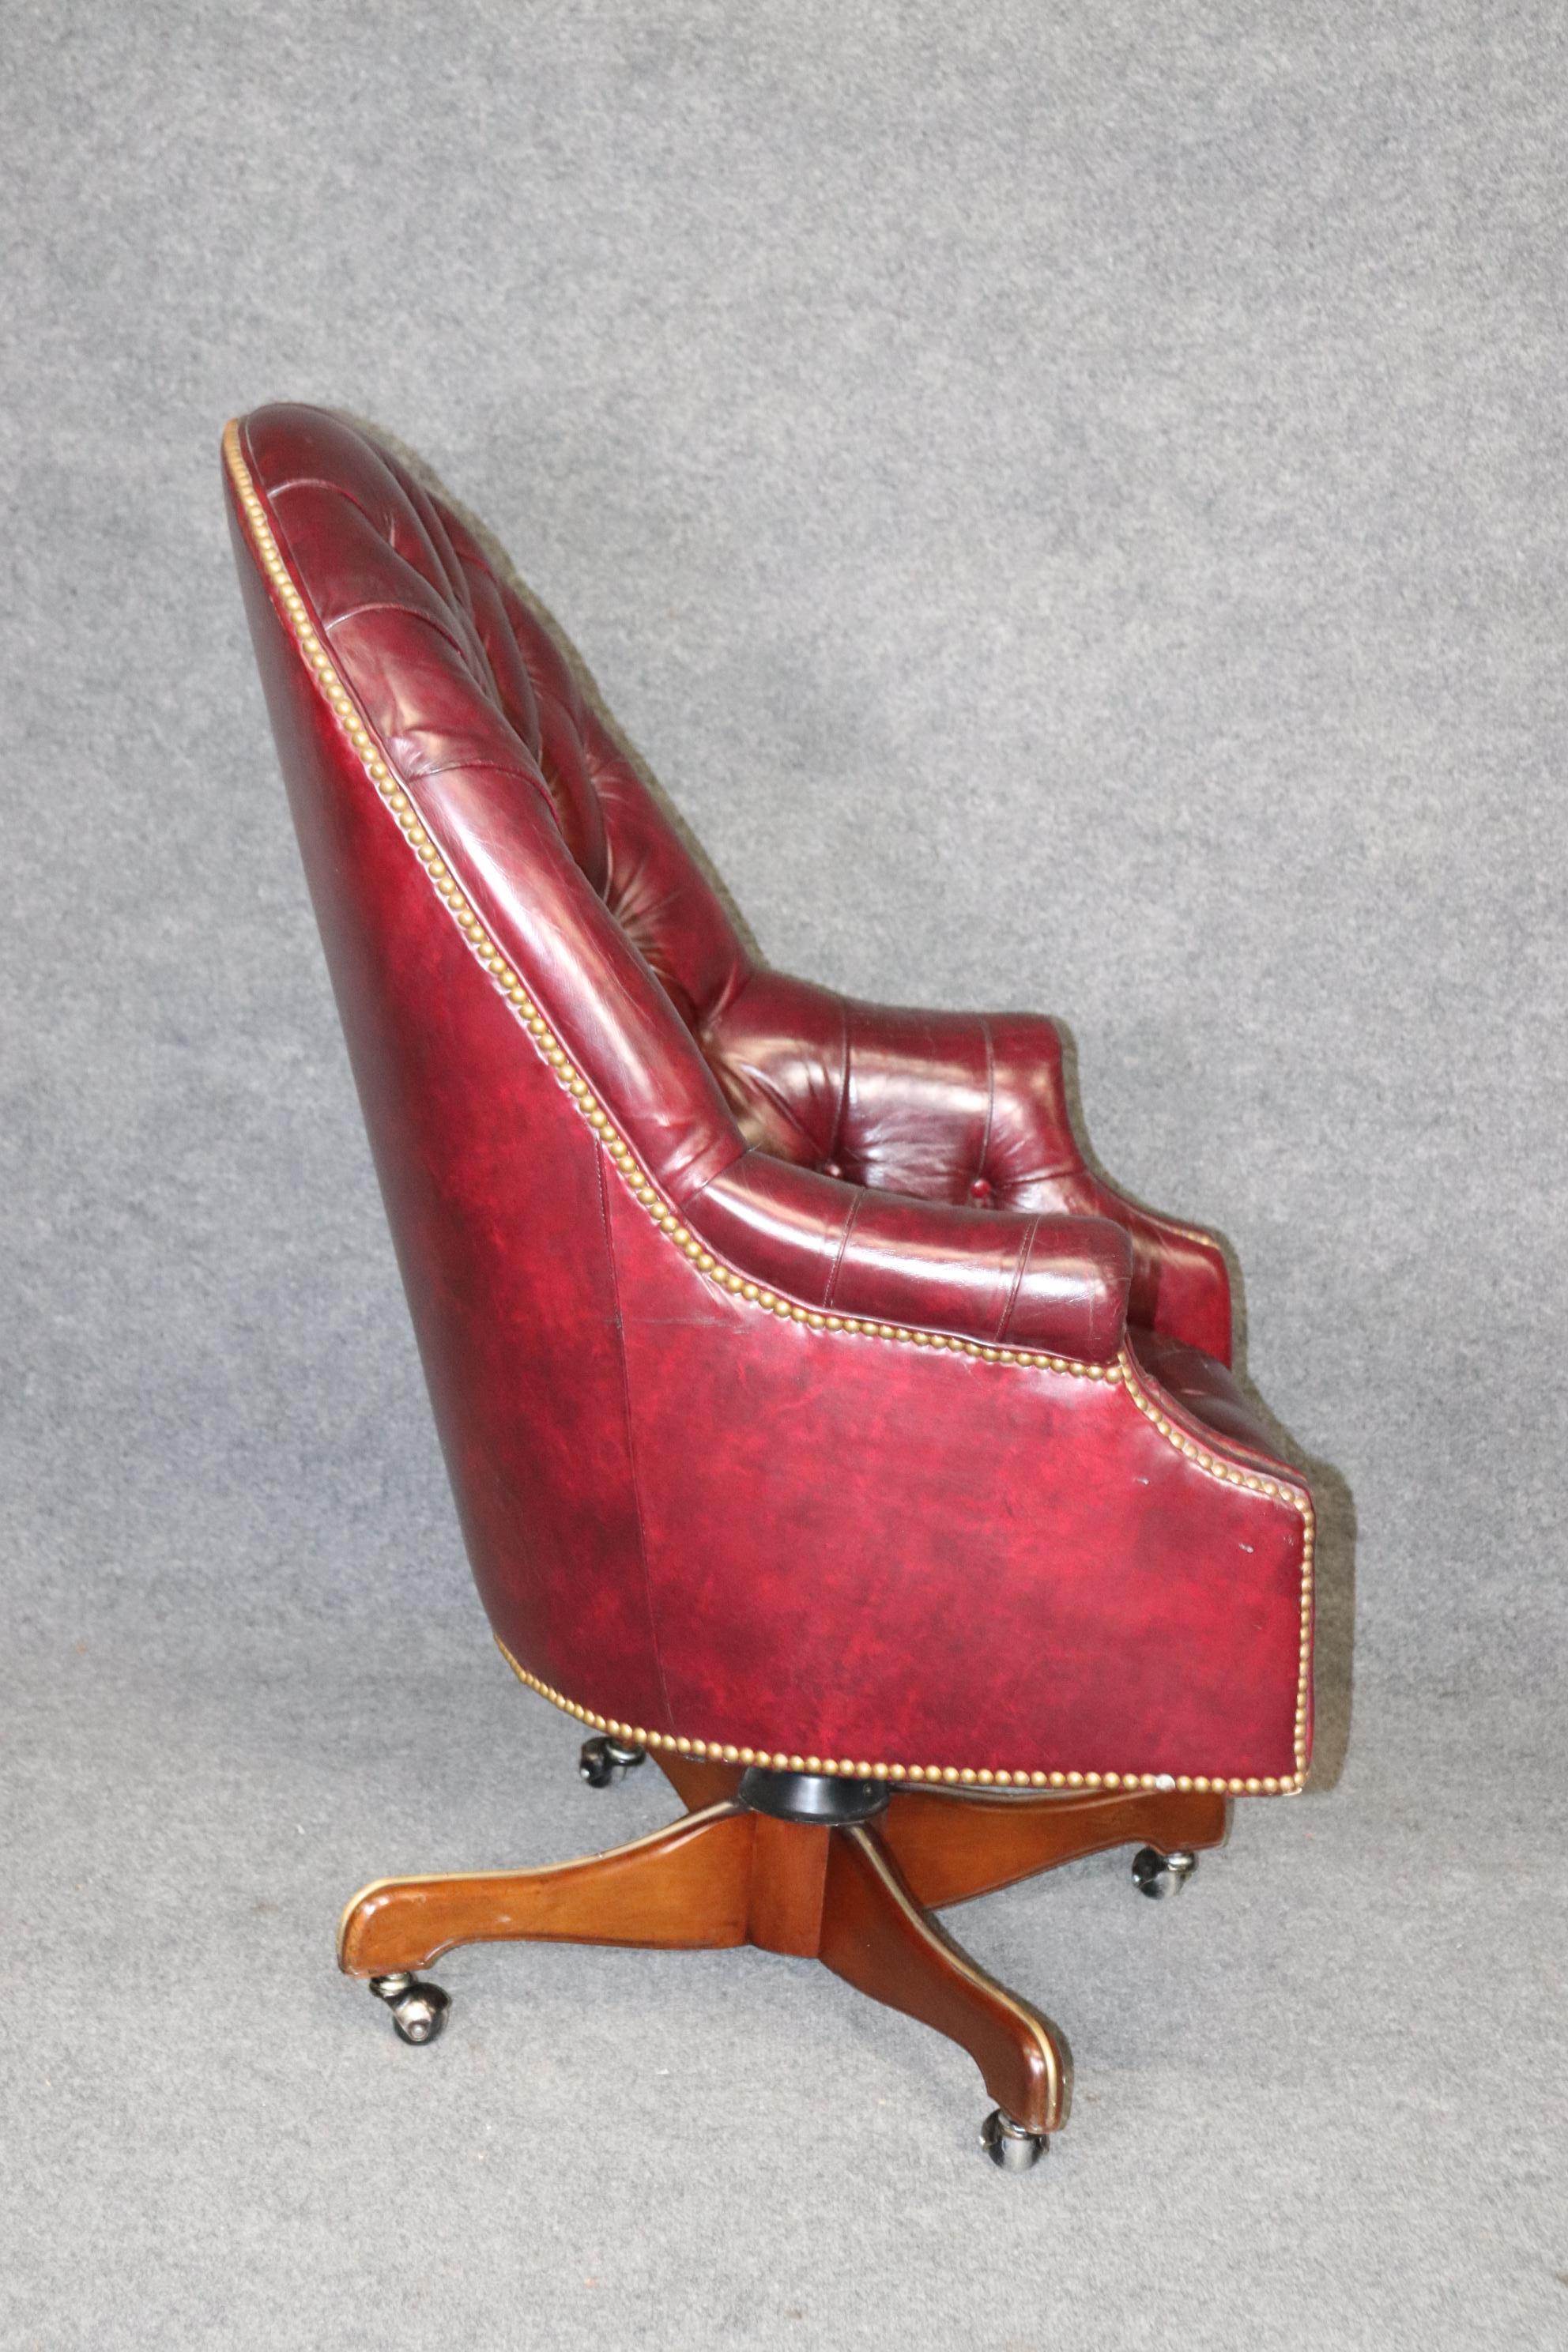 chesterfield swivel chair